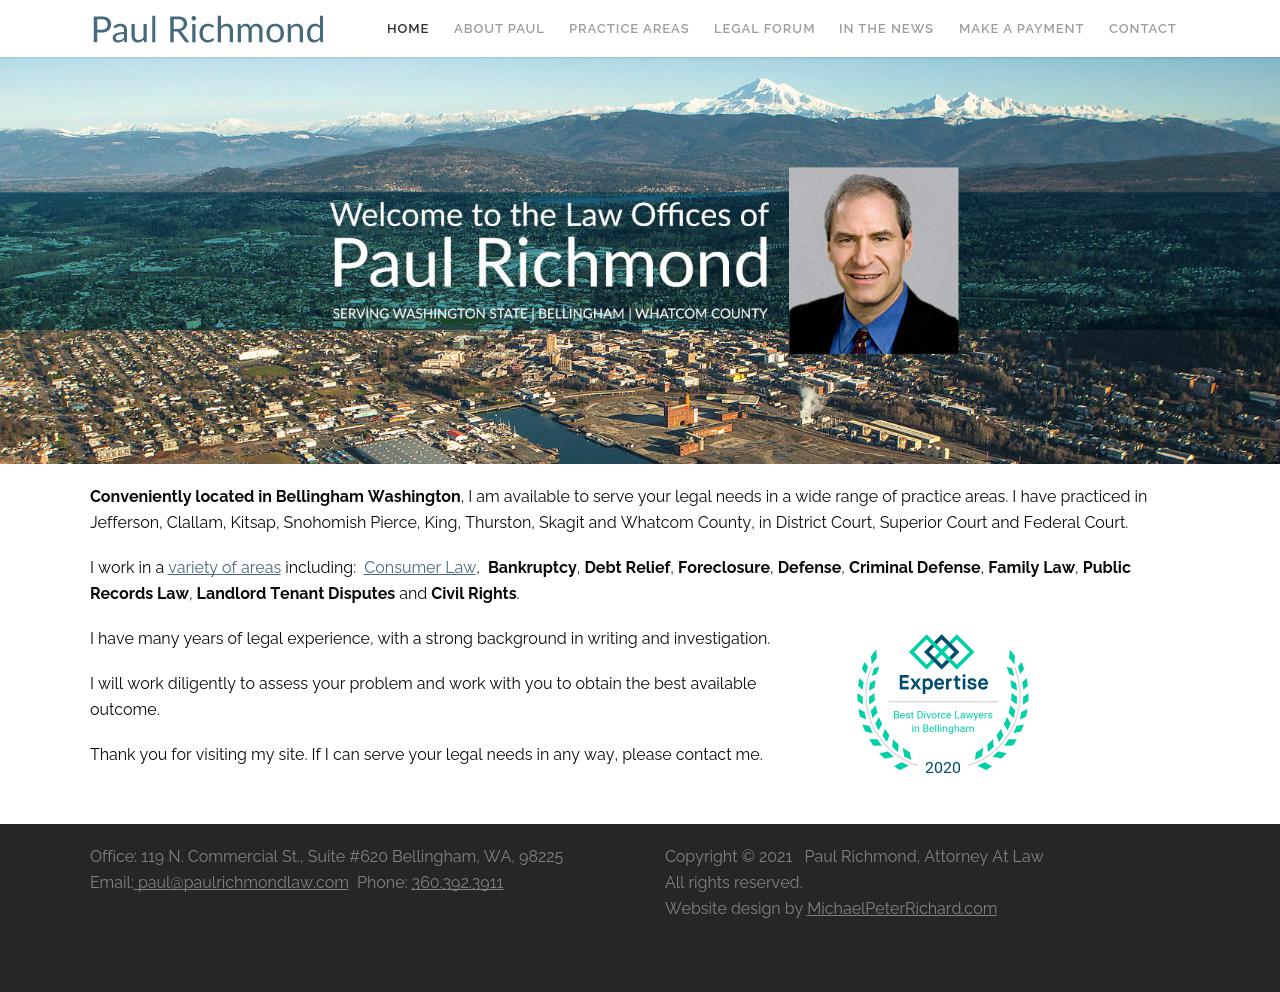 Paul Richmond Law Office - Port Townsend WA Lawyers